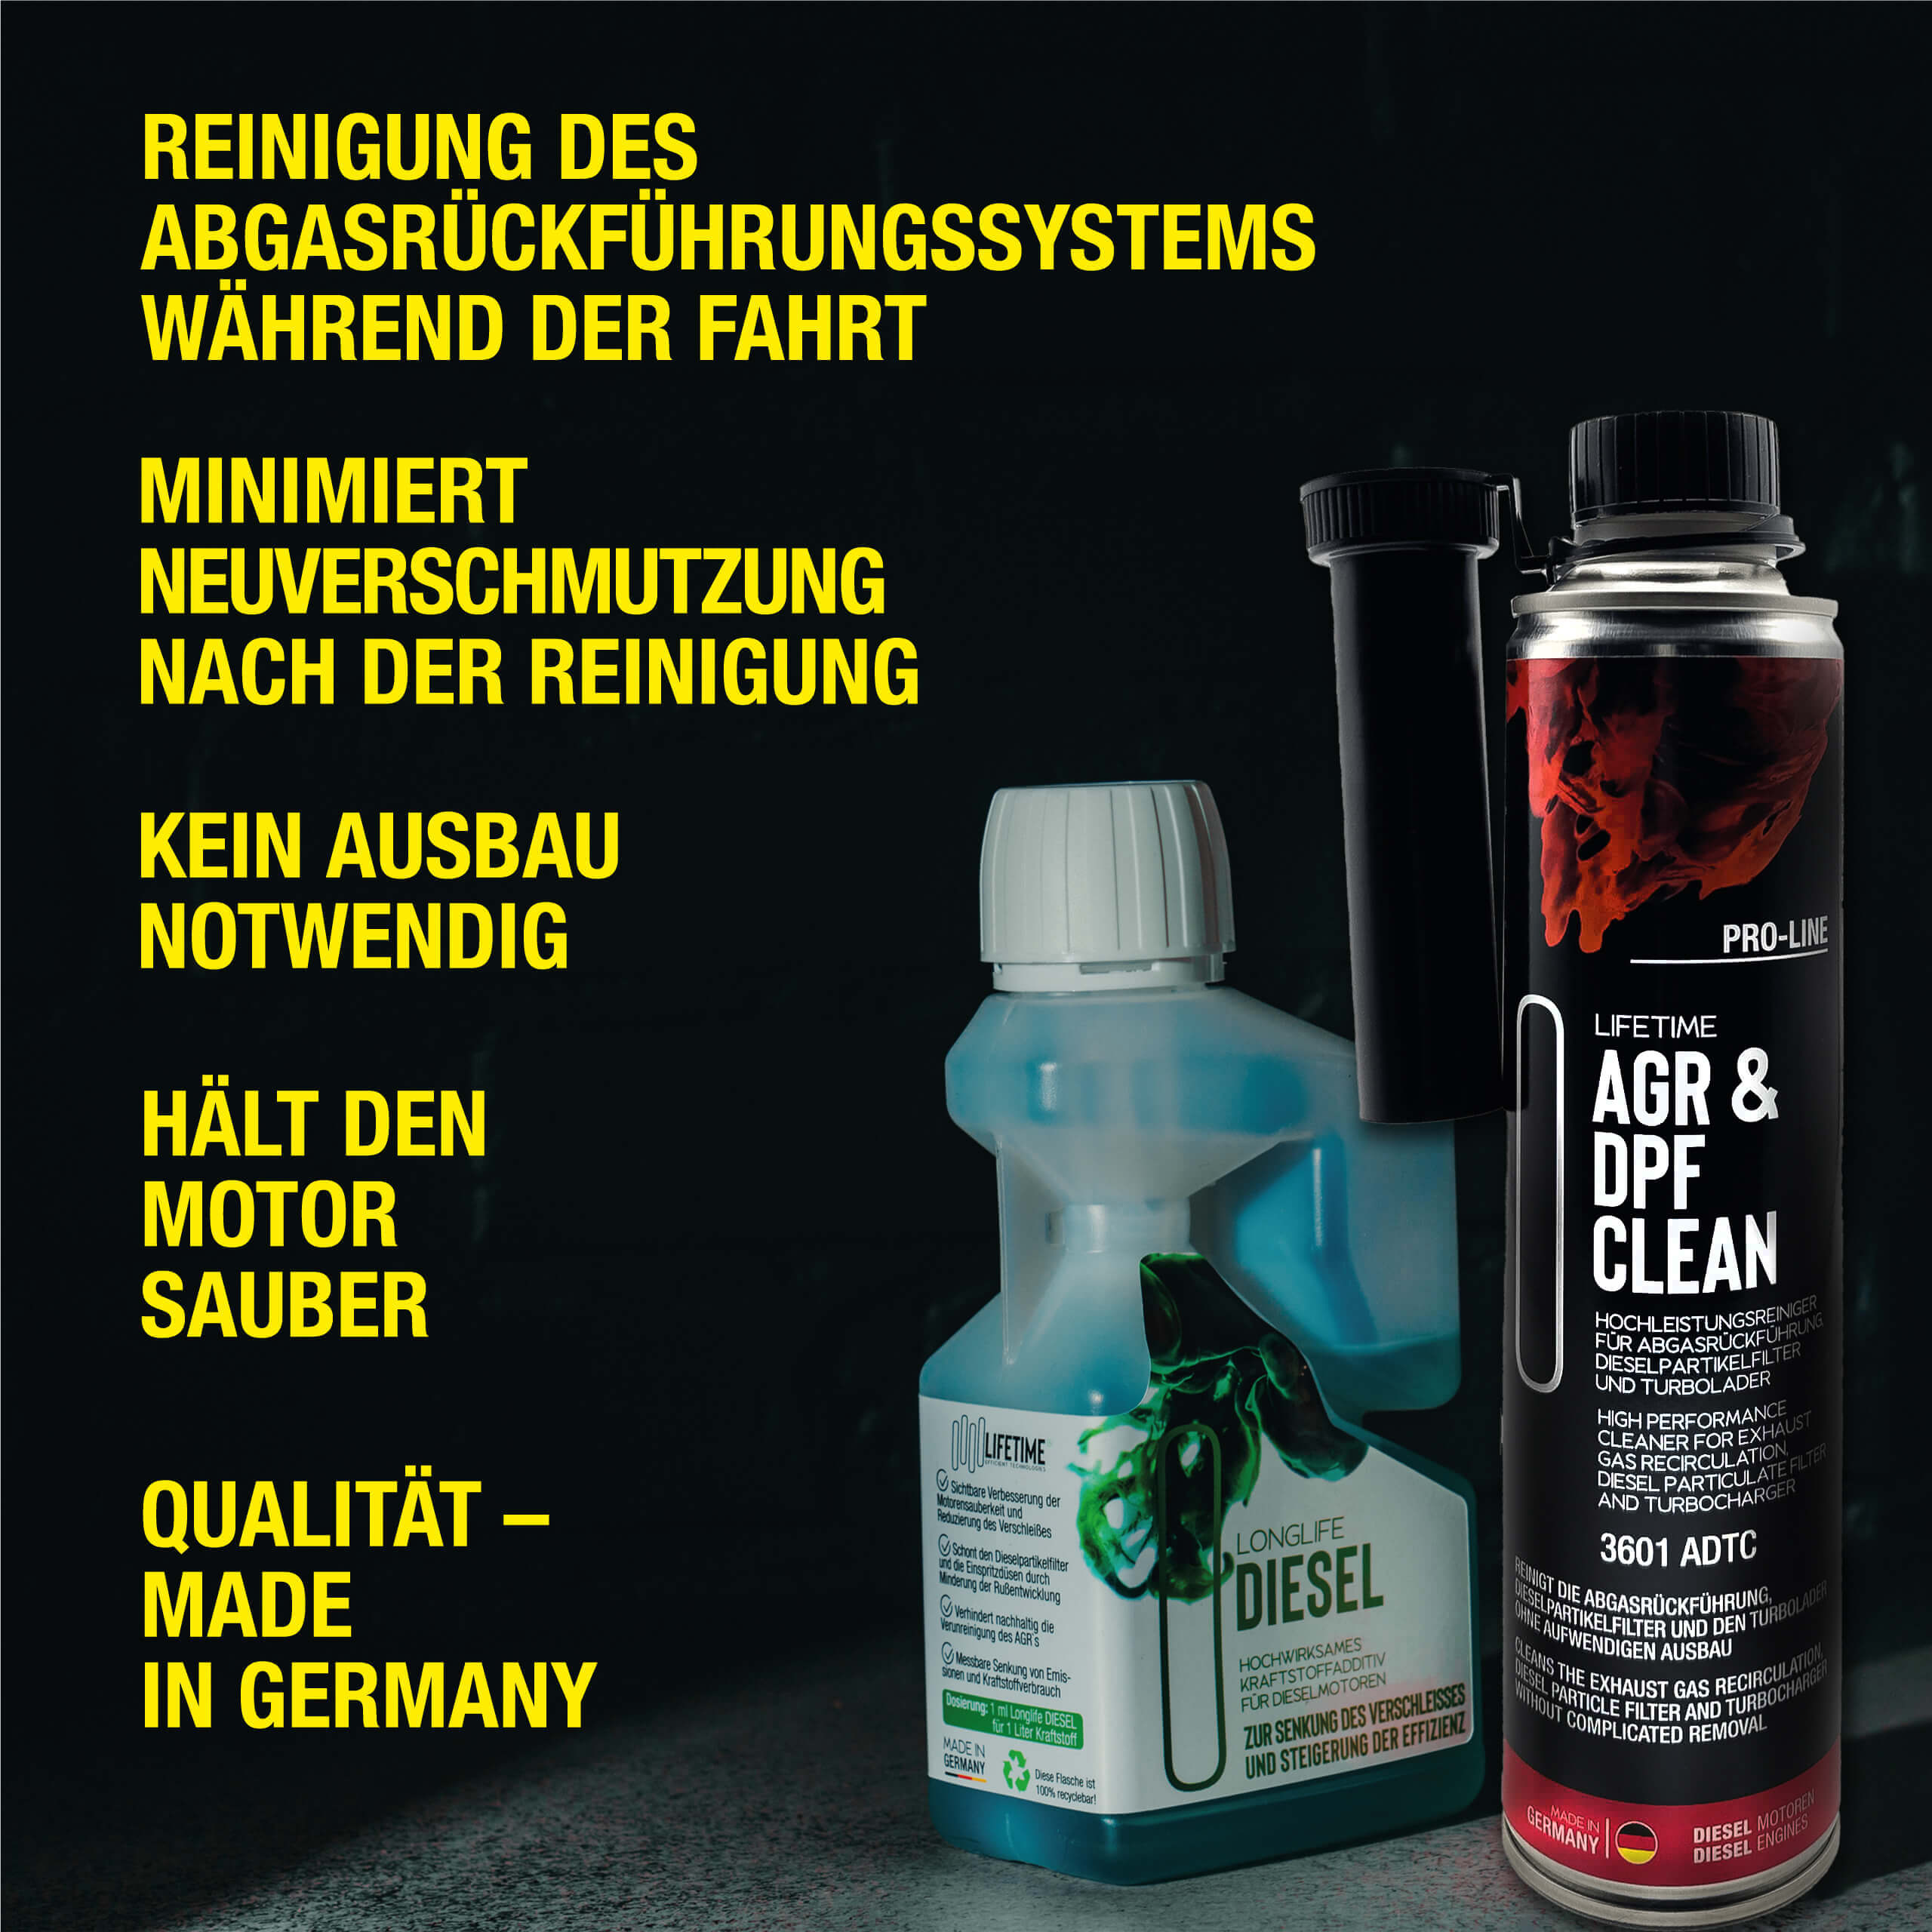 Lifetime AGR & DPF CLEAN PRO-LINE, Diesel Additiv